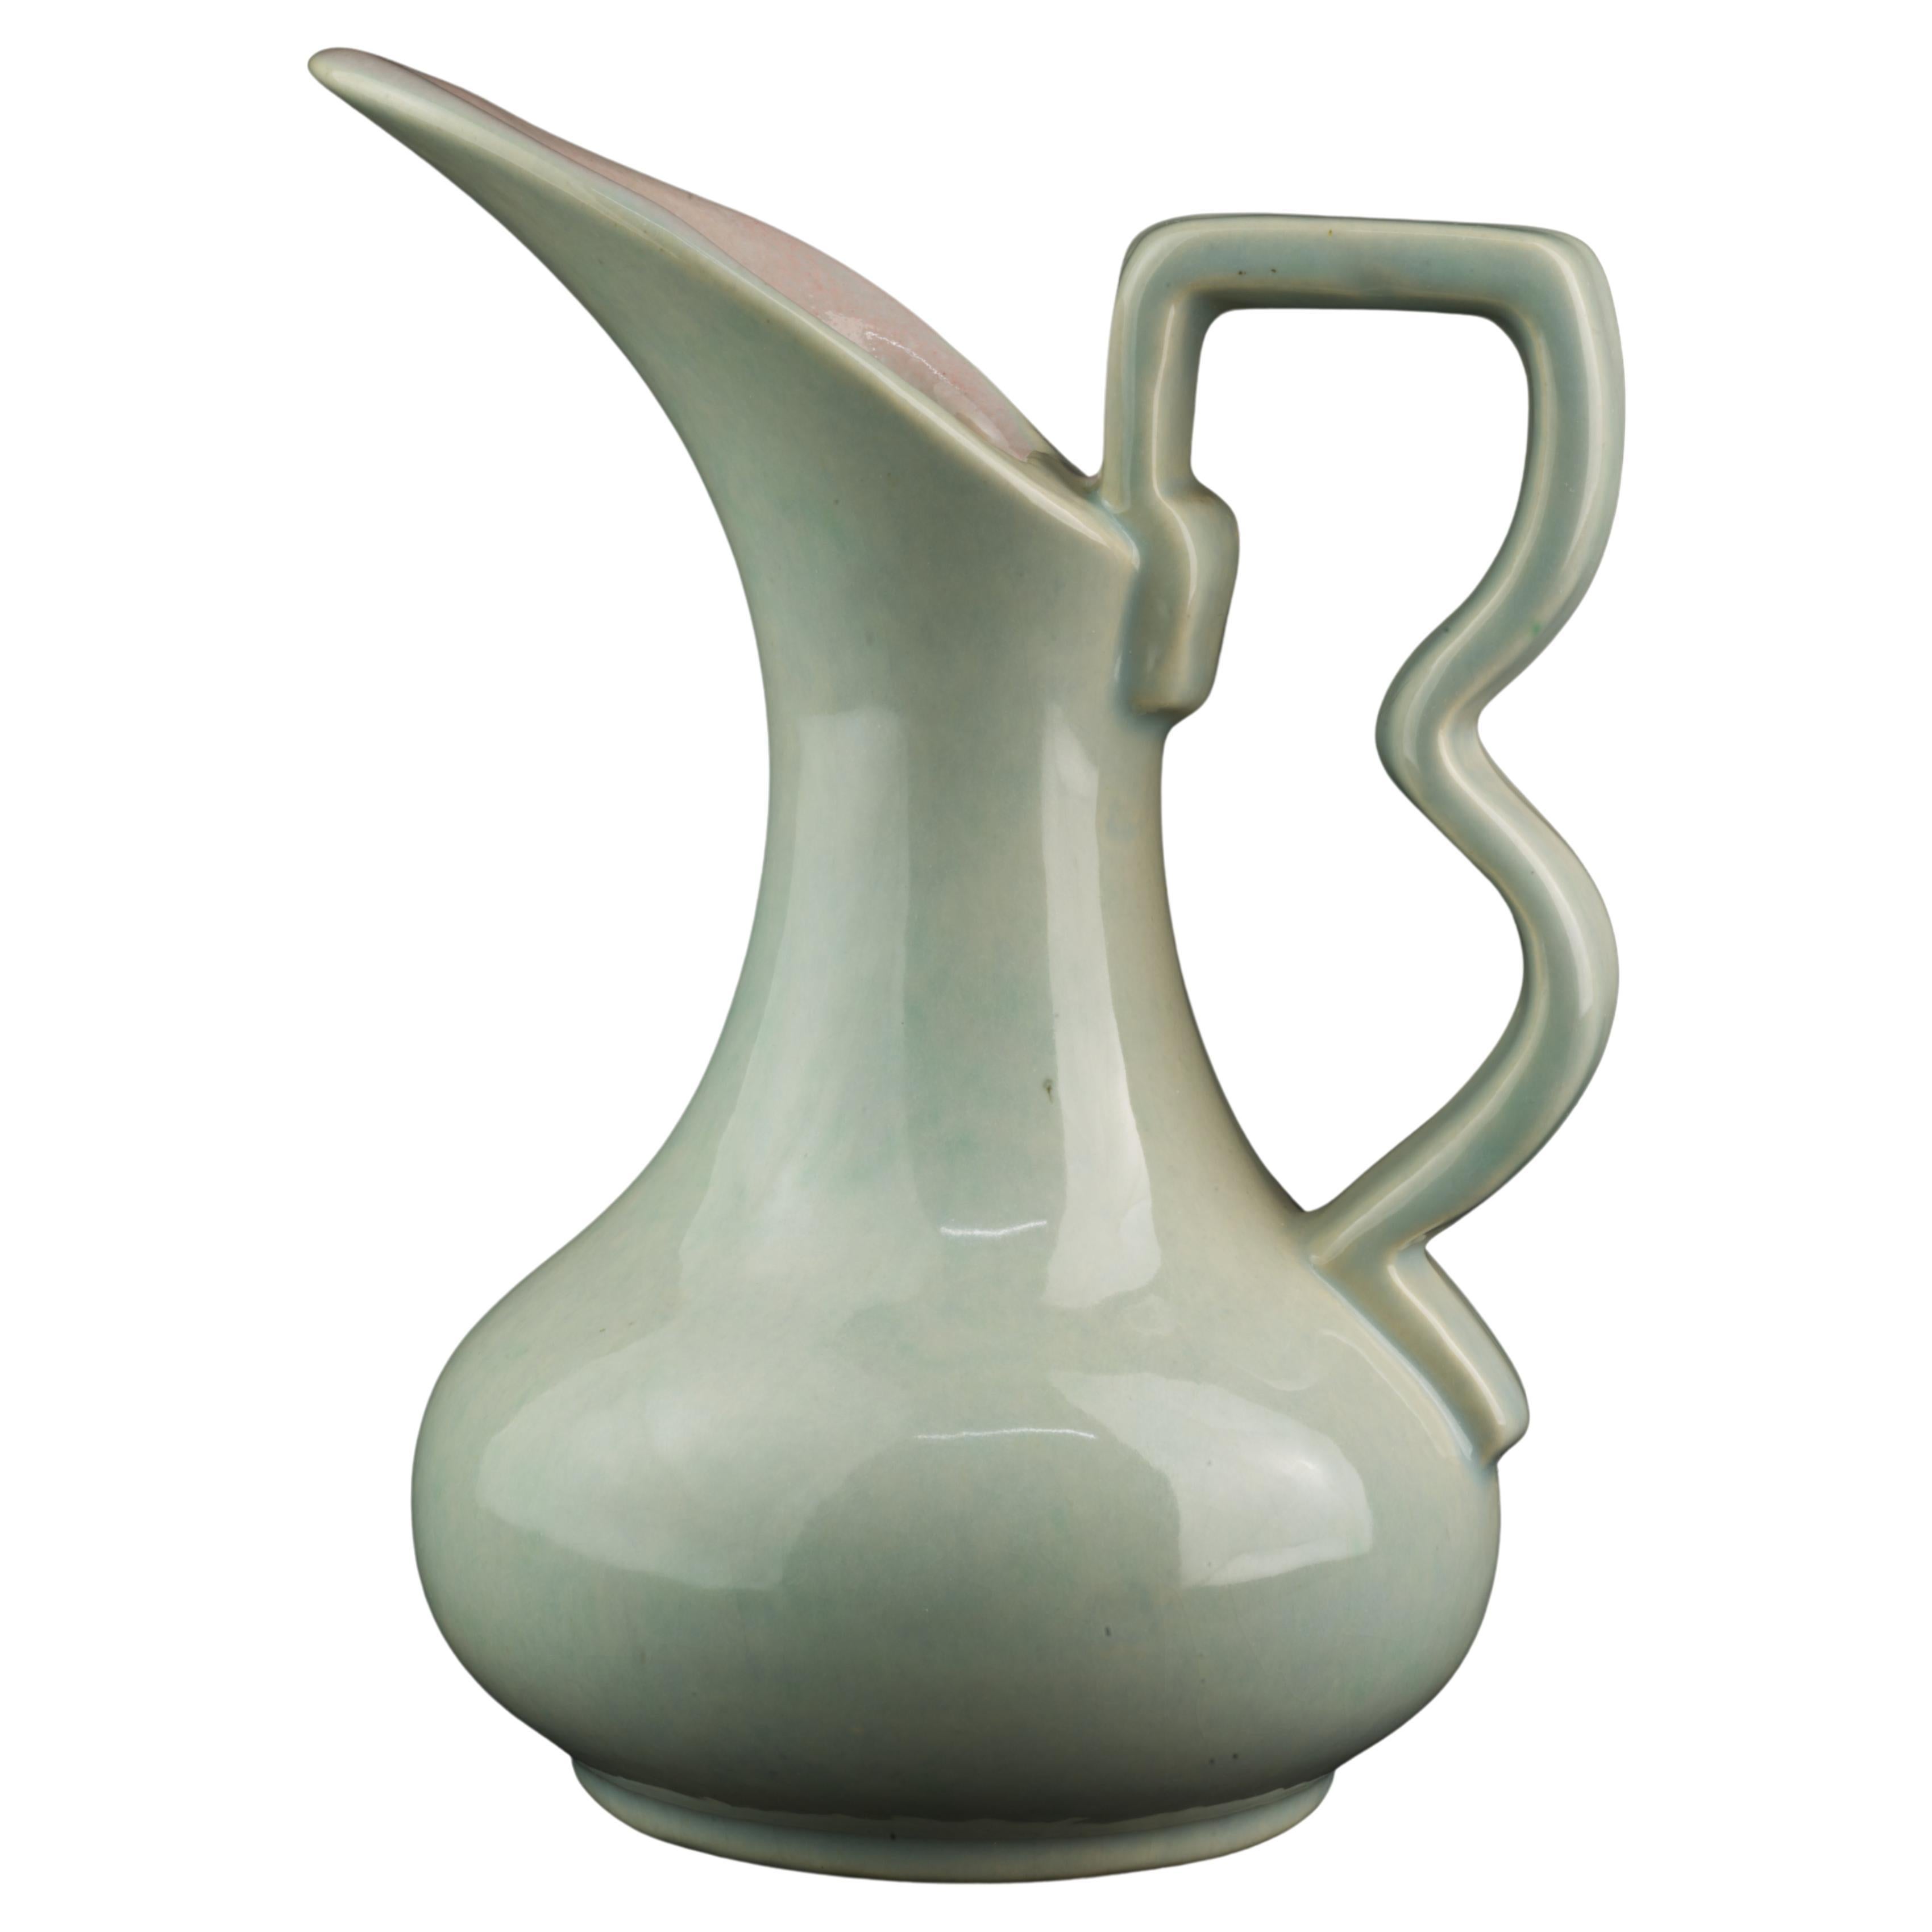 Gonder Pottery Bud Vase Ewer in Grey and Pink Glaze 1940s-1950s